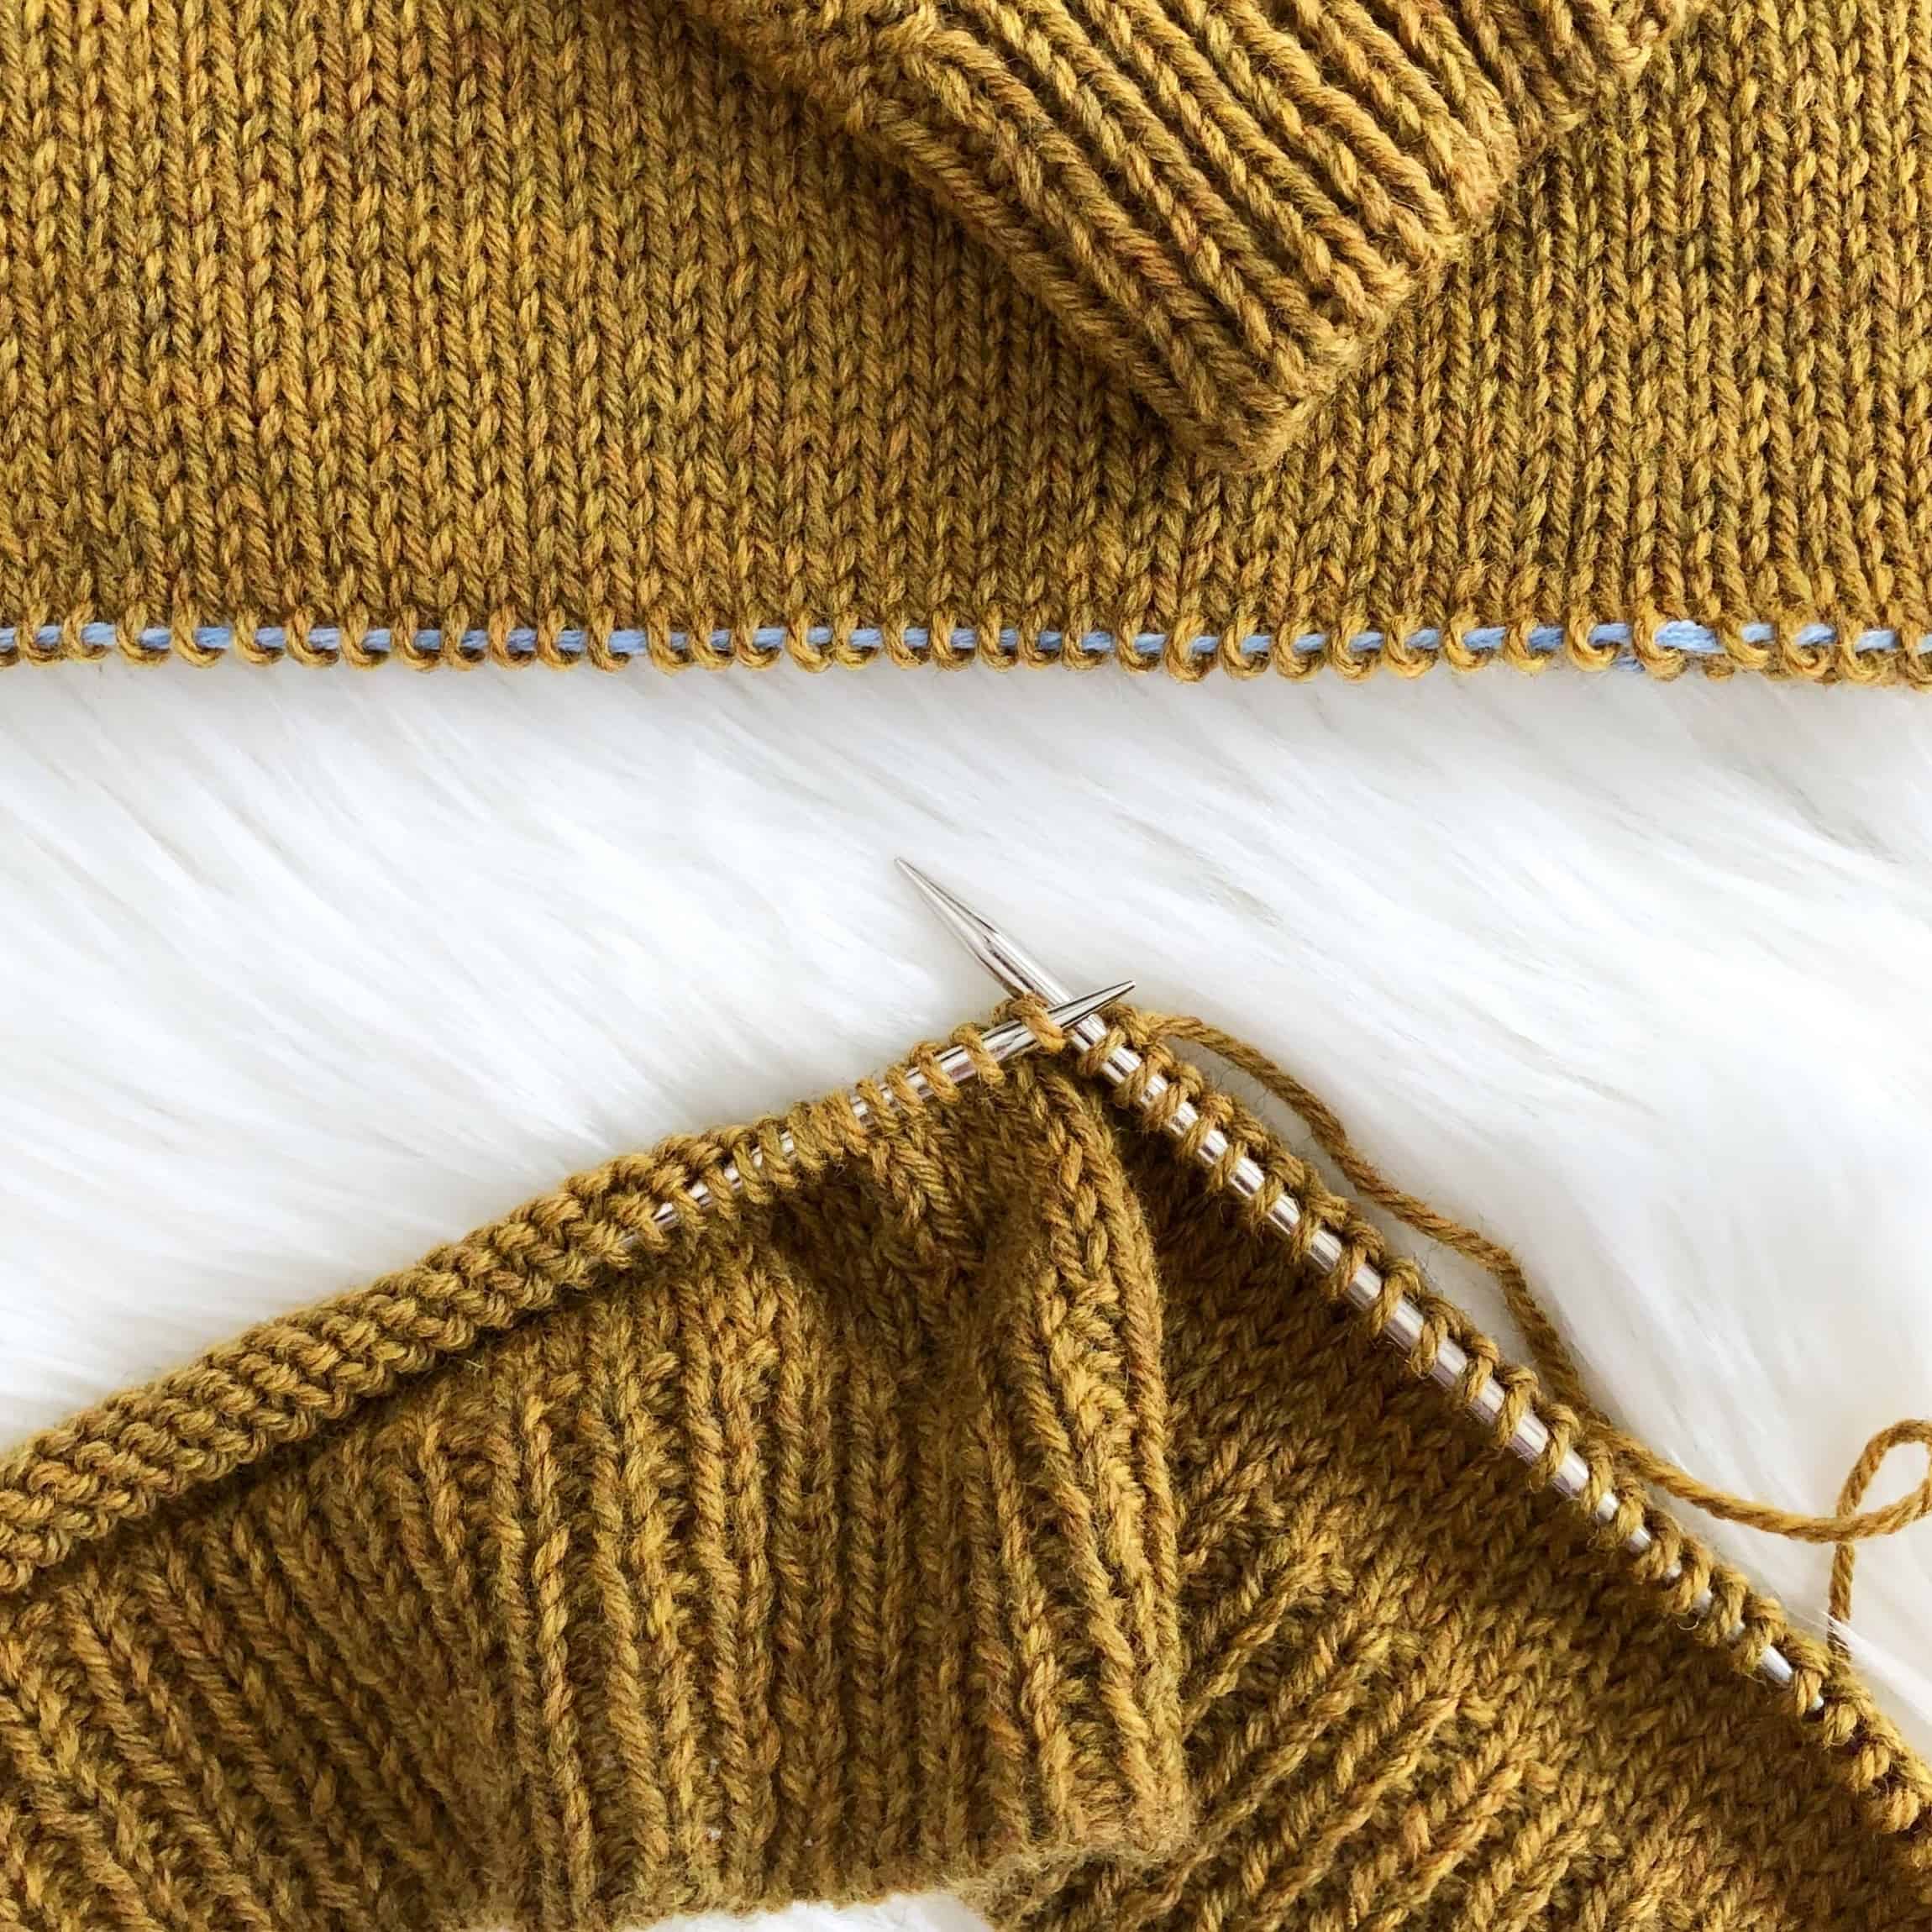  Knit Sweater